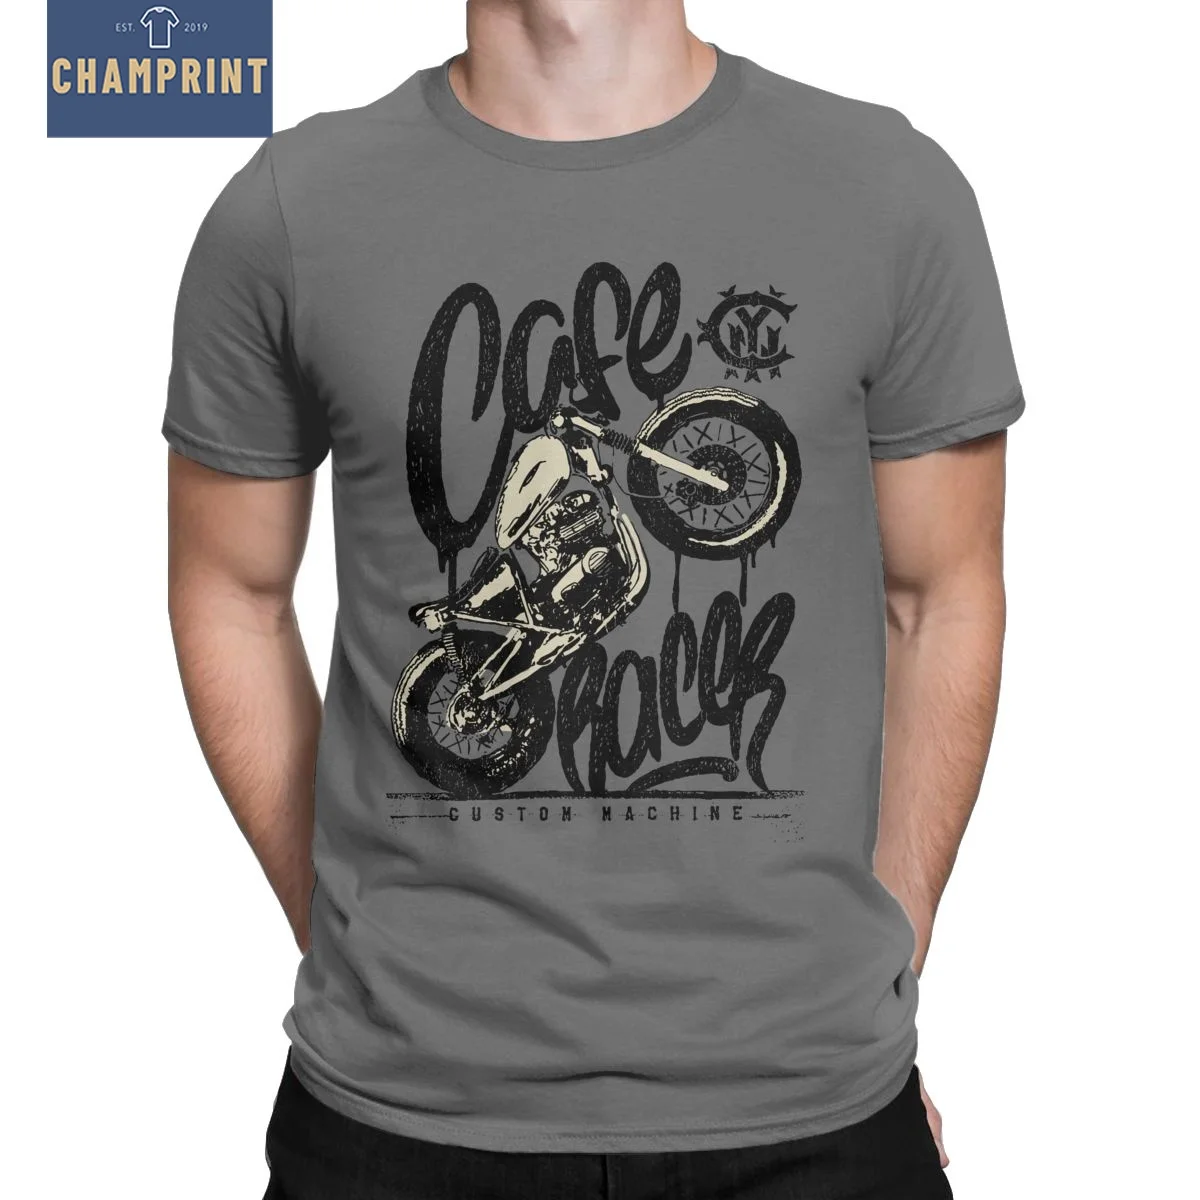 

Happiness Cafe Racer Vintage Moto Custom Motorcycle T Shirt Men 100% Cotton T-Shirts Cool Tee Shirt Short Sleeve Tops Gift Idea